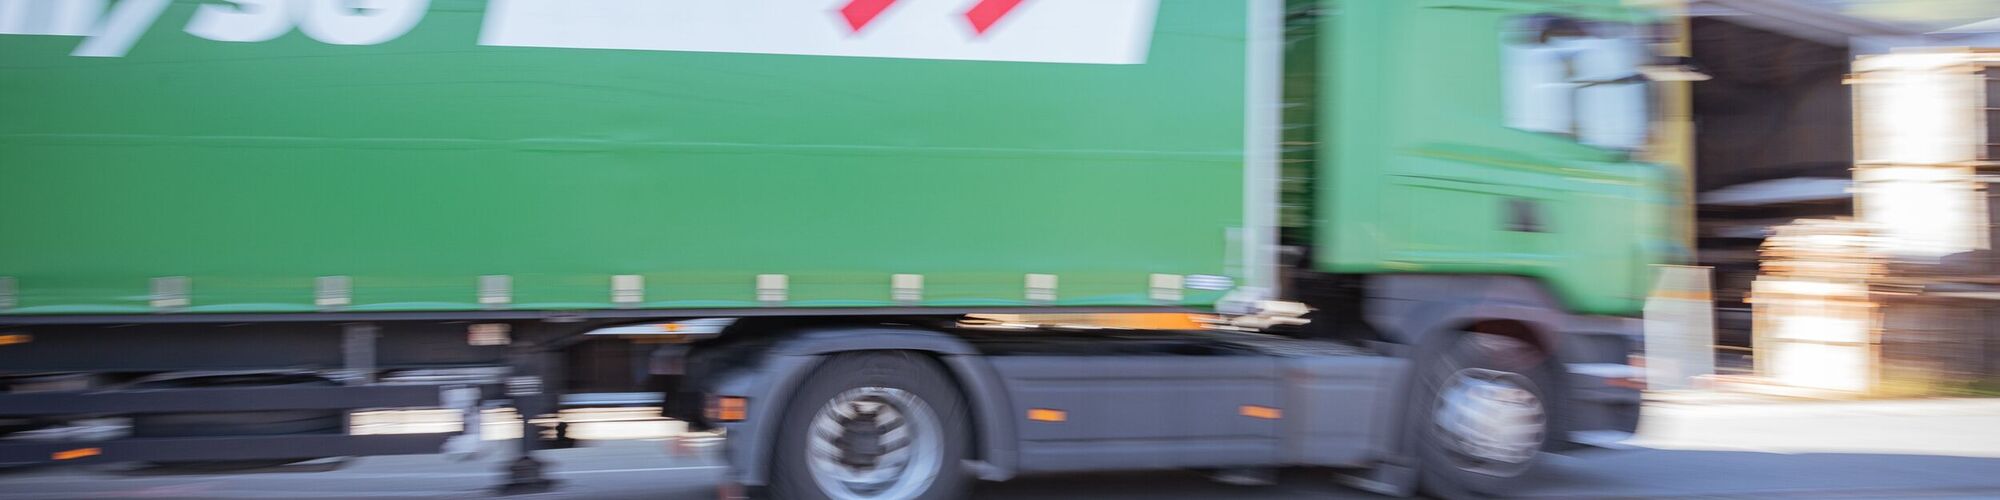 Lastwagen in Fahrt - Hasler Logistik AG